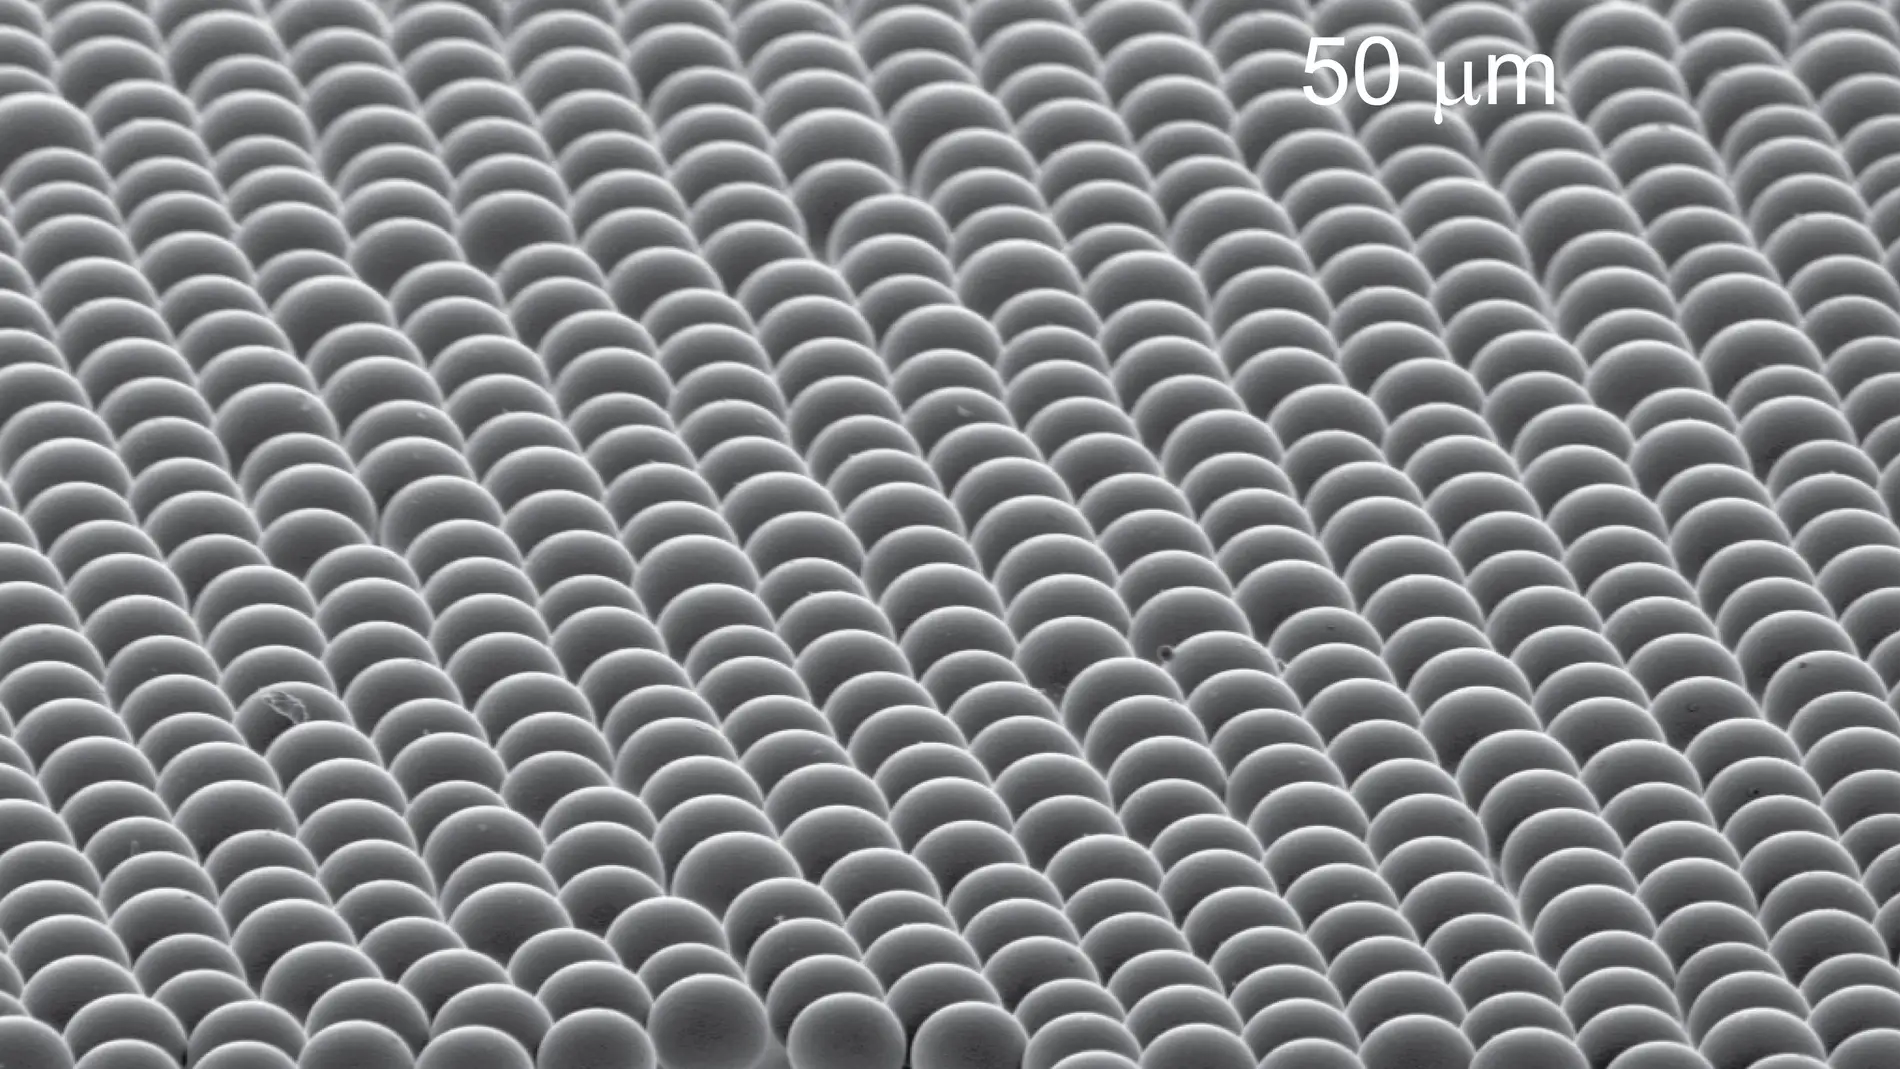 Microesferas de silice para enfriar superficies sin consumir energia